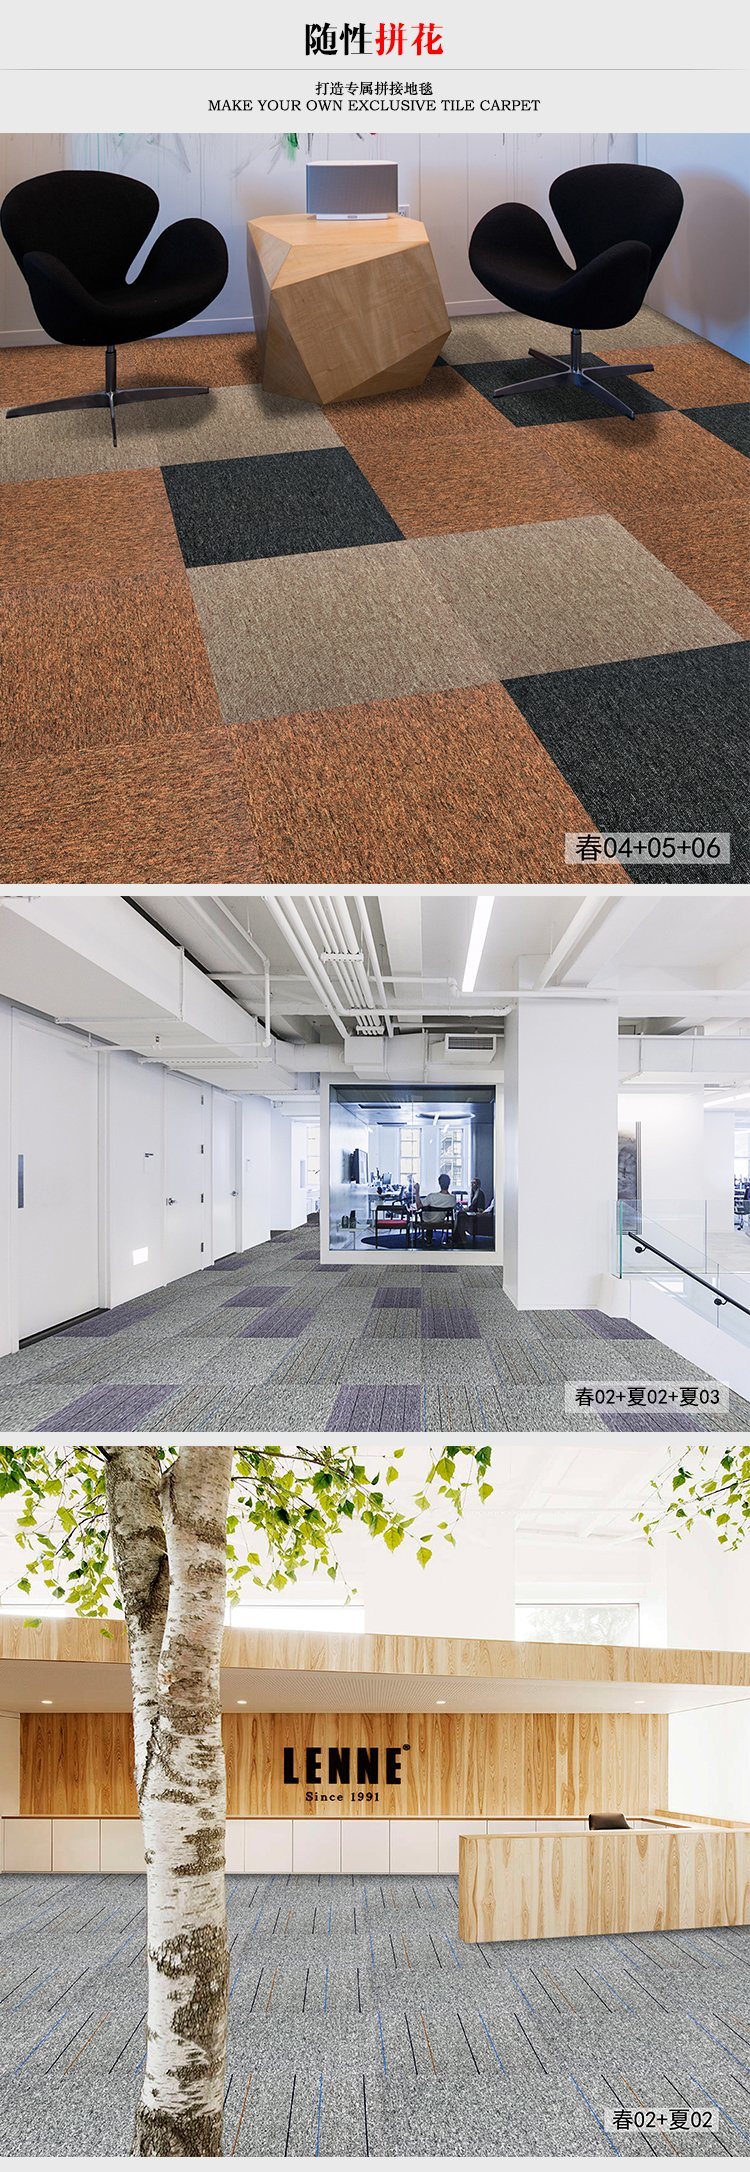 China Top 10 Carpet Manufacturers PP Washable Anti Slip Flooring Carpet_Tiles for Home